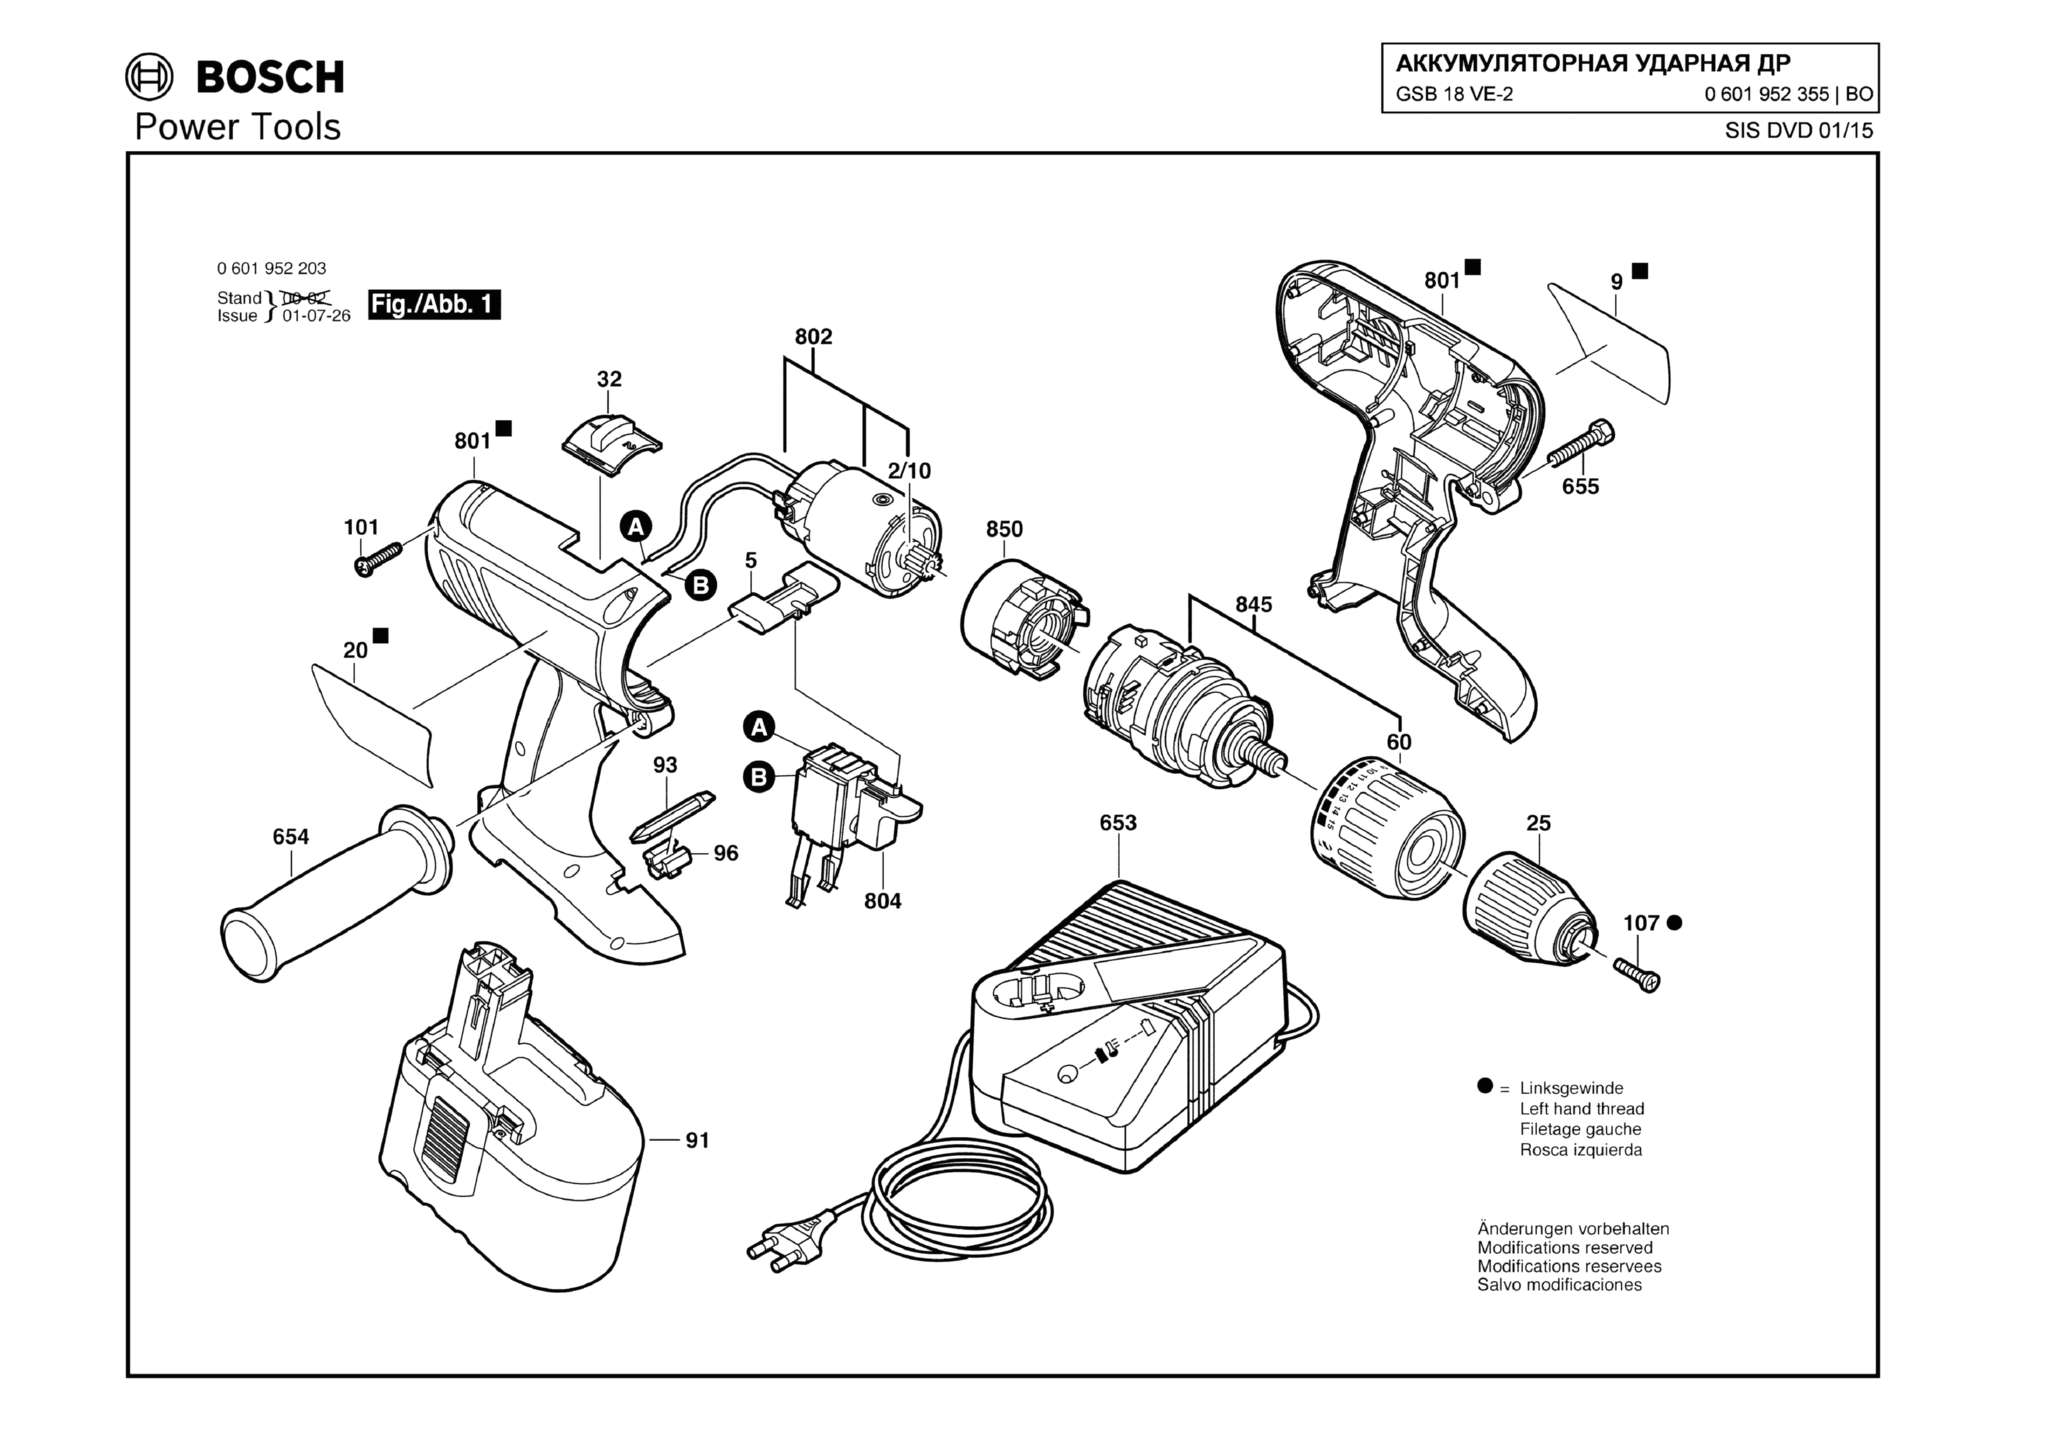 Запчасти, схема и деталировка Bosch GSB 18 VE-2 (ТИП 0601952355)